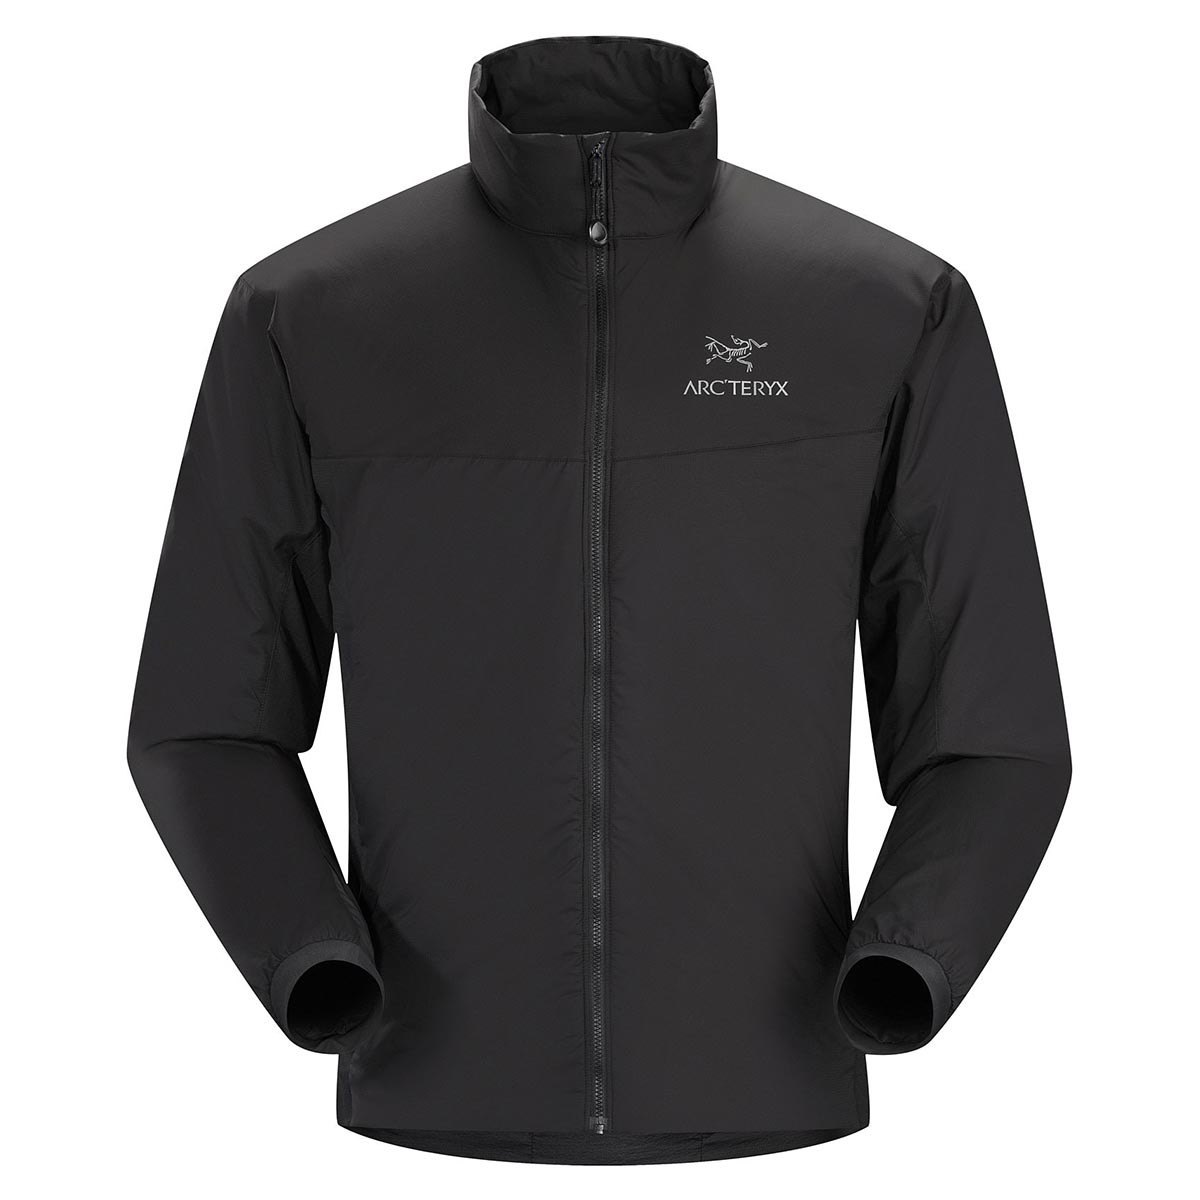 Arc'teryx Atom LT Jacket, men's, Spring 2018 colors of discontinued ...